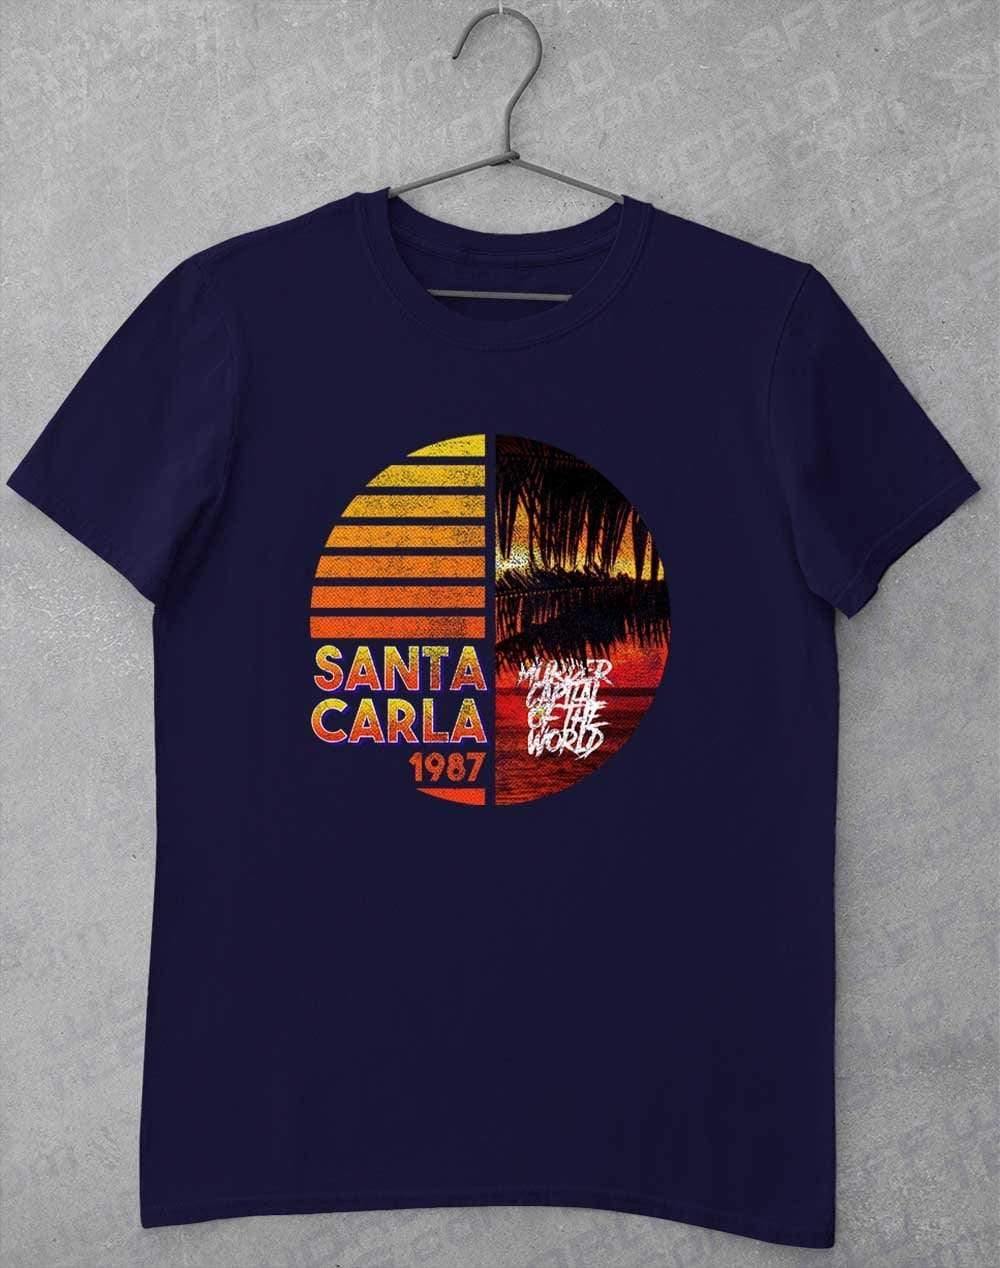 Santa Carla 1987 - T-Shirt S / Navy  - Off World Tees